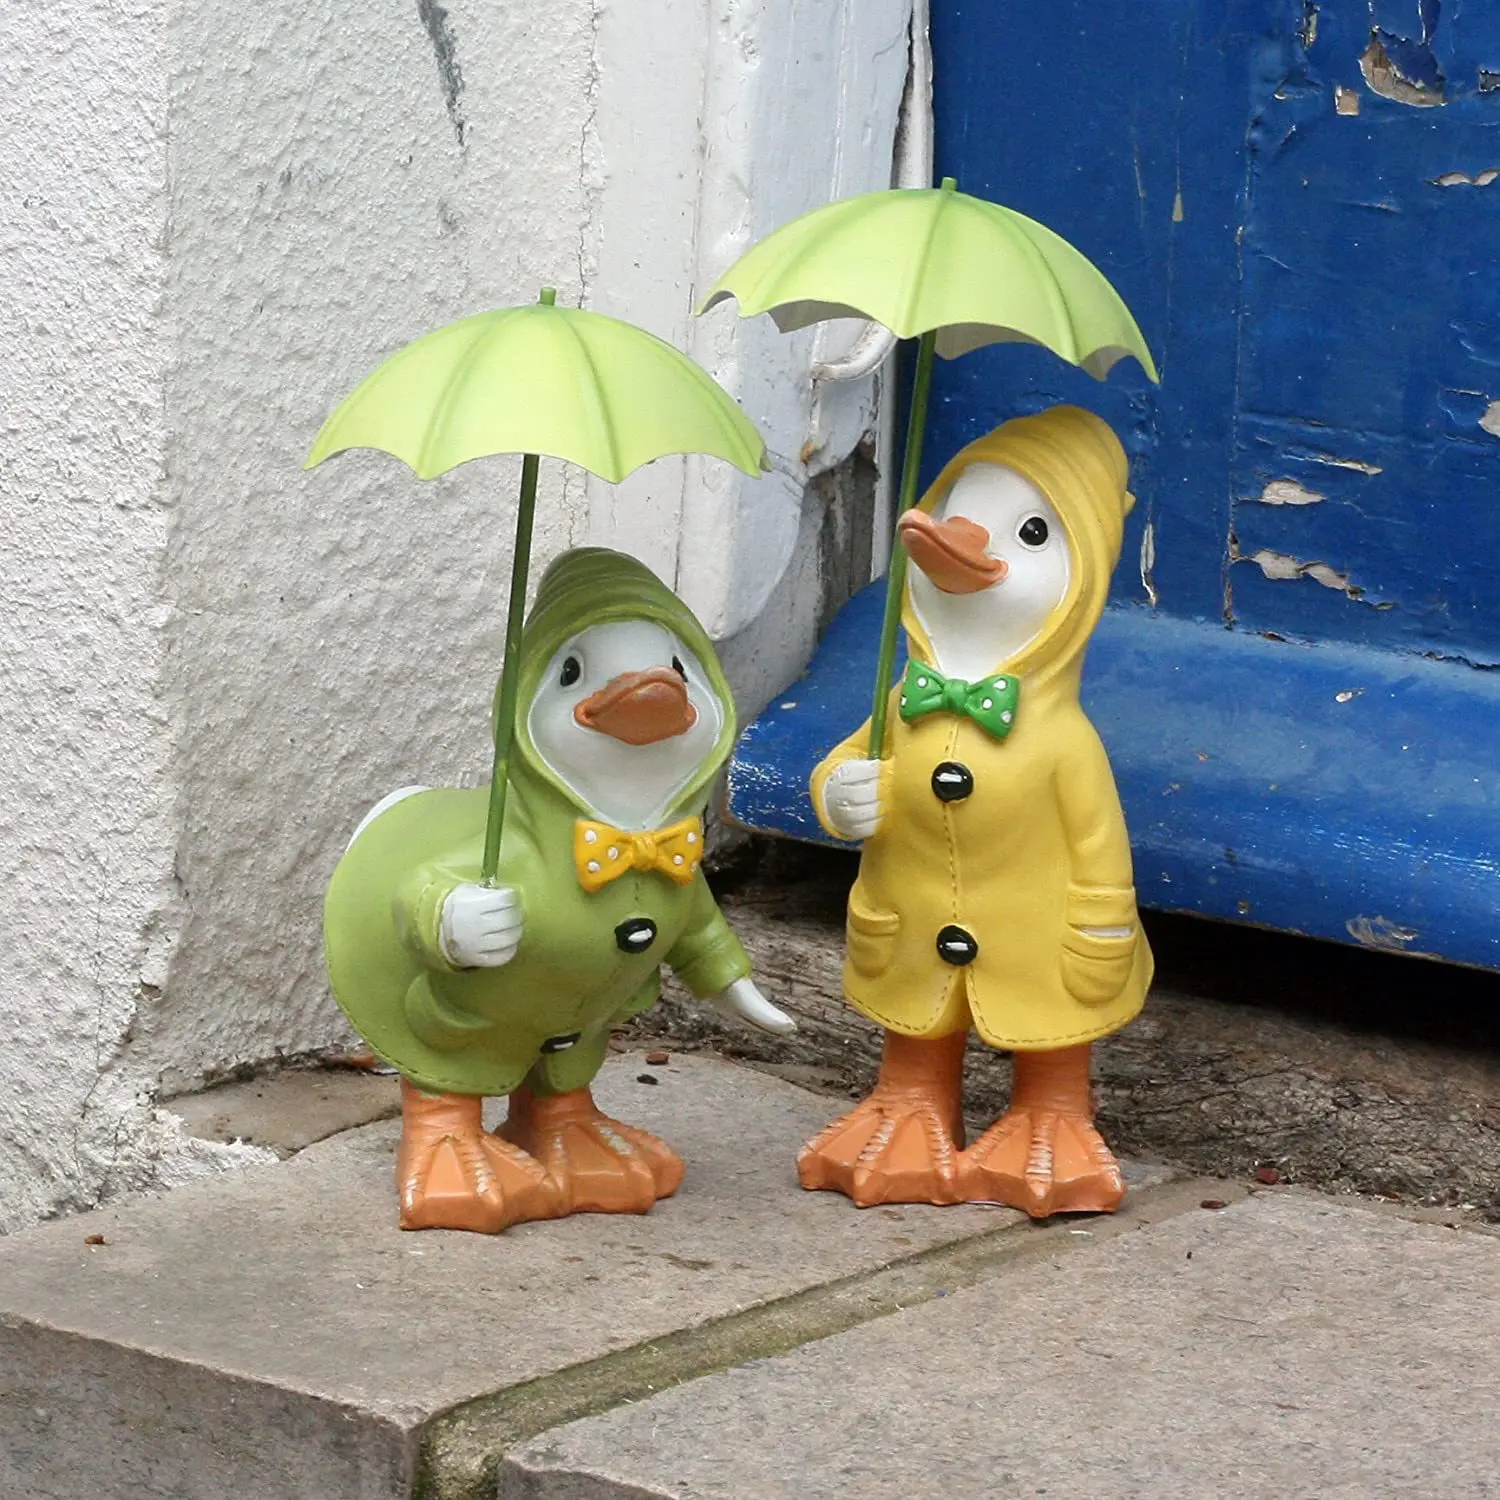 

Cute Duck Miniature Figurine Resin Holding Umbrella Wearing Raincoat Ducklings Ornaments for Garden Decoration Home Desktop Decr